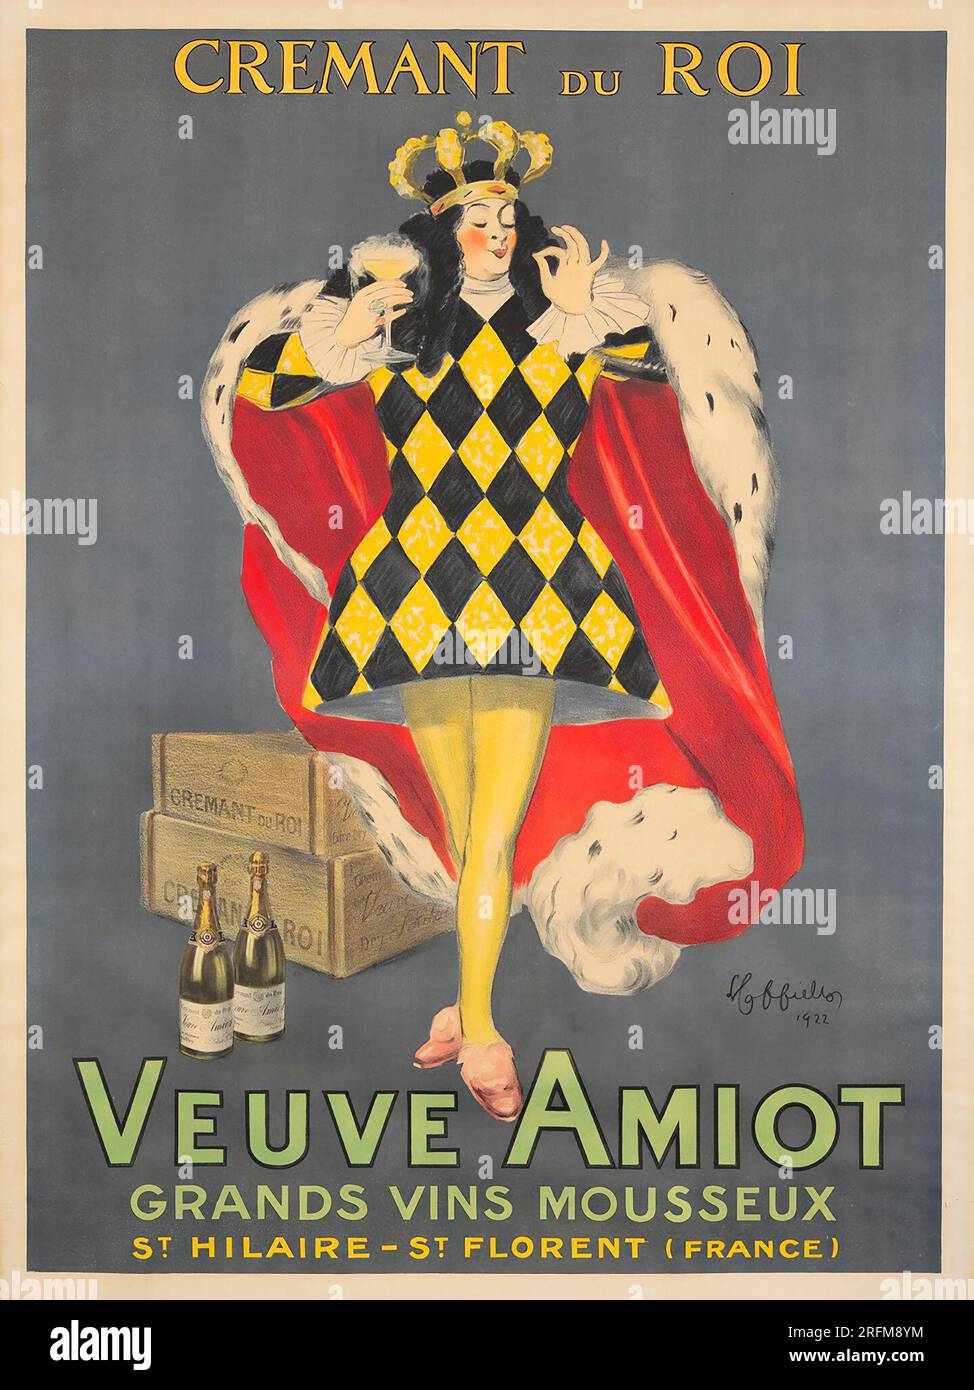 Veuve Amiot - Crémant du Roi. Vintage advertisement poster by Leonetto Cappiello 1922 Stock Photo